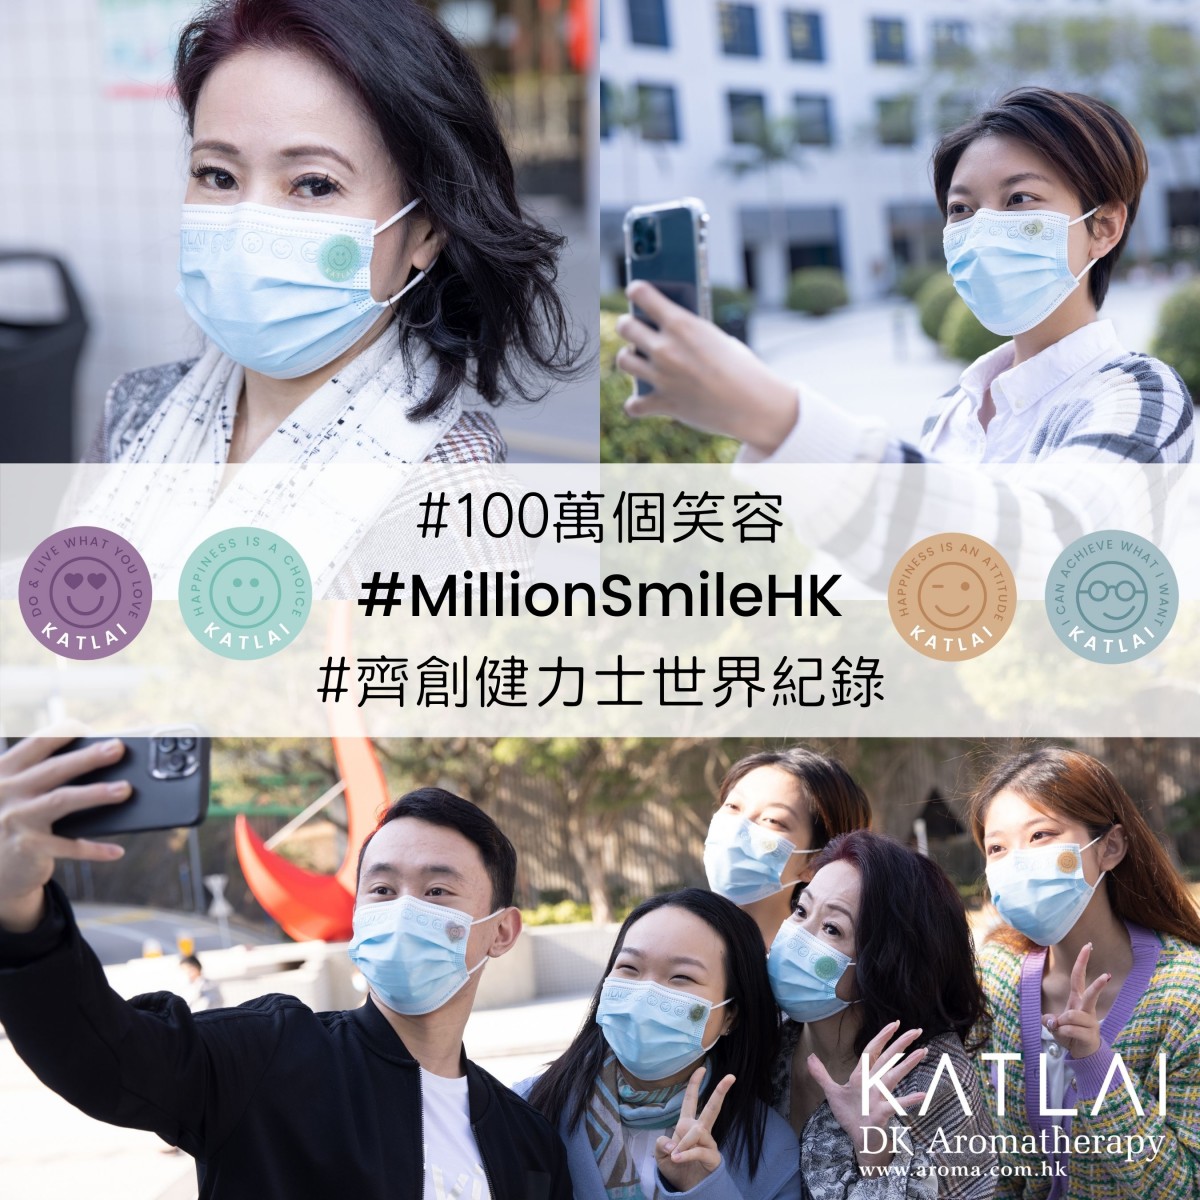 “MillionSmileHK” Campaign